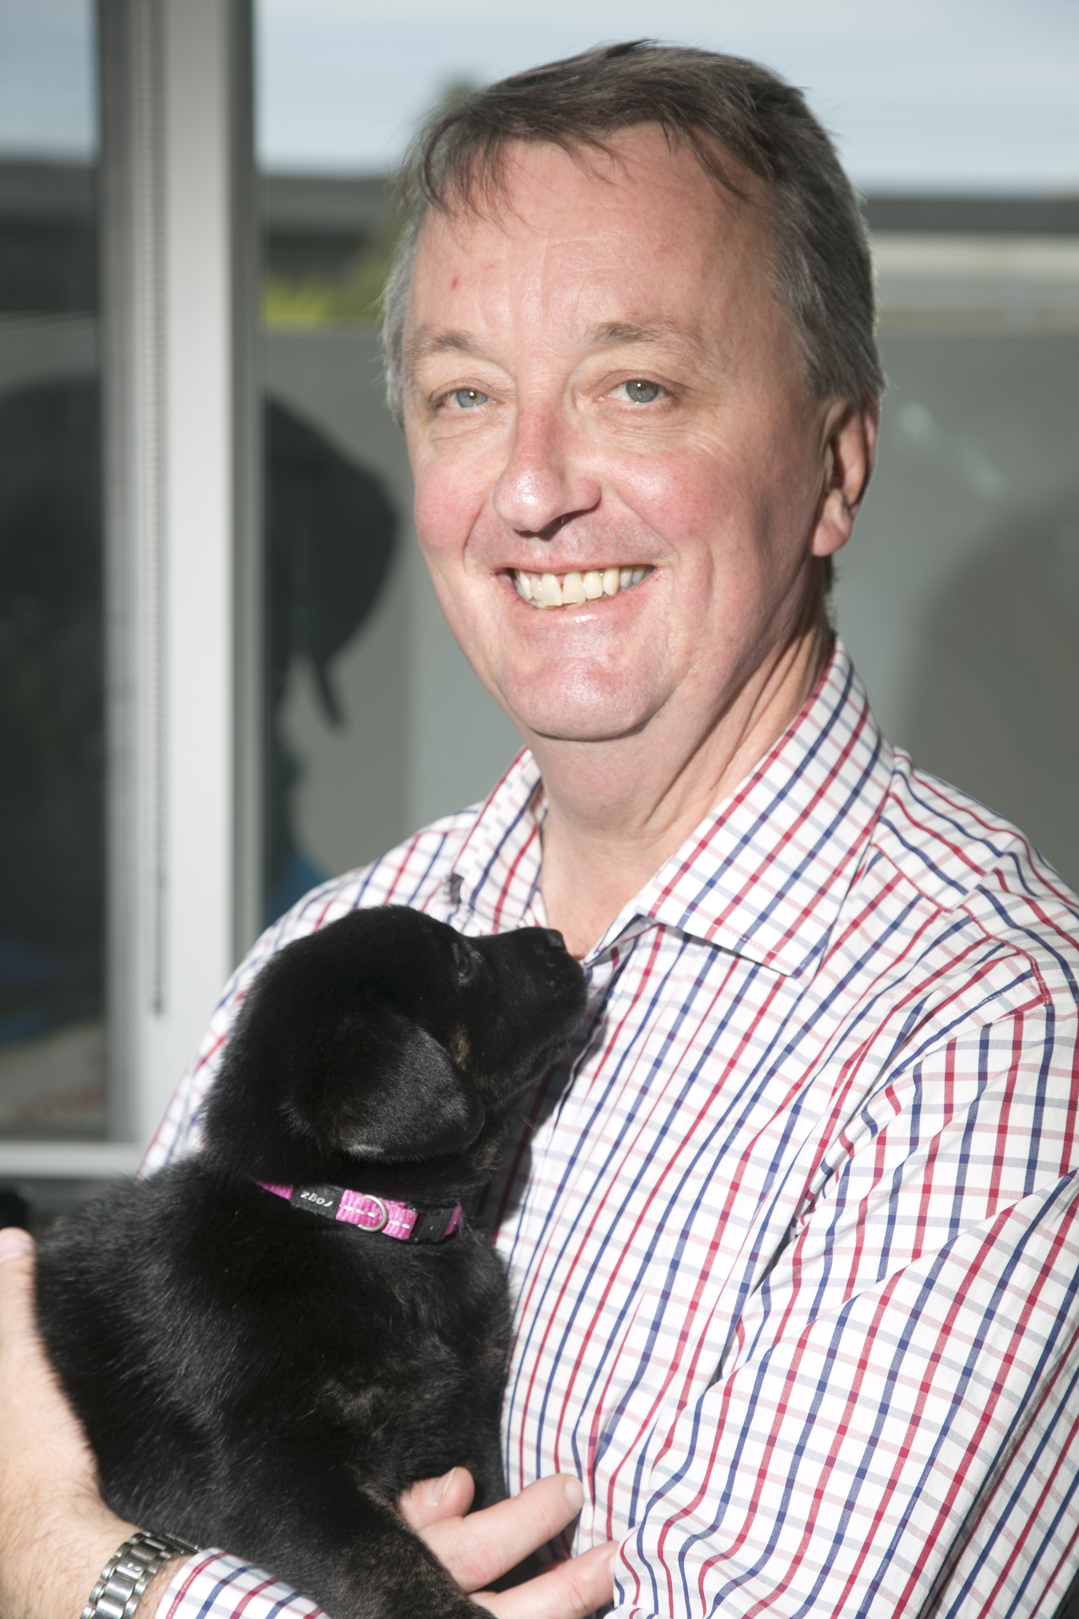 Minister Foley holding a black labrador puppy